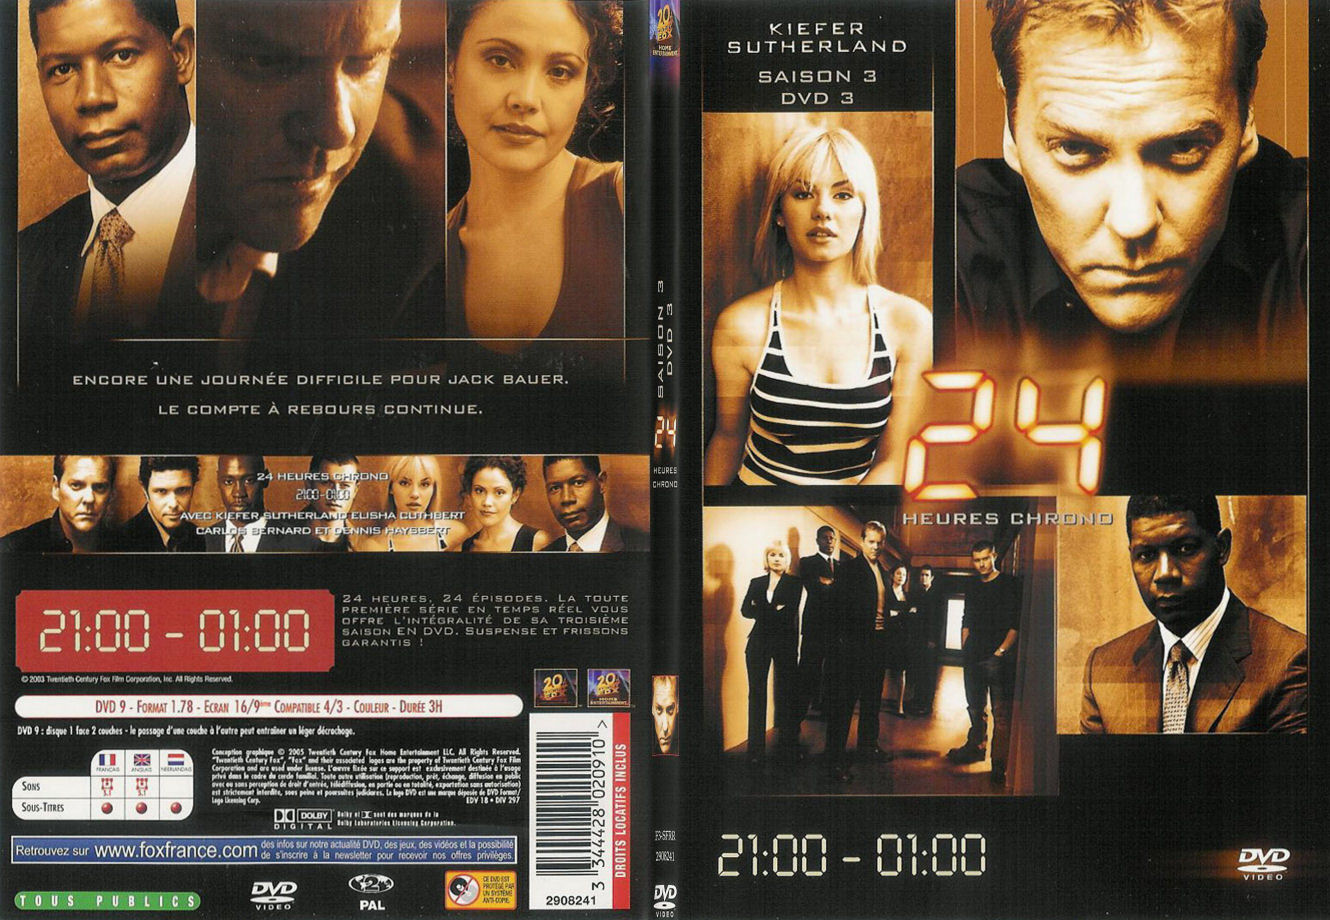 Jaquette DVD 24 heures chrono Saison 3 dvd 3 - SLIM